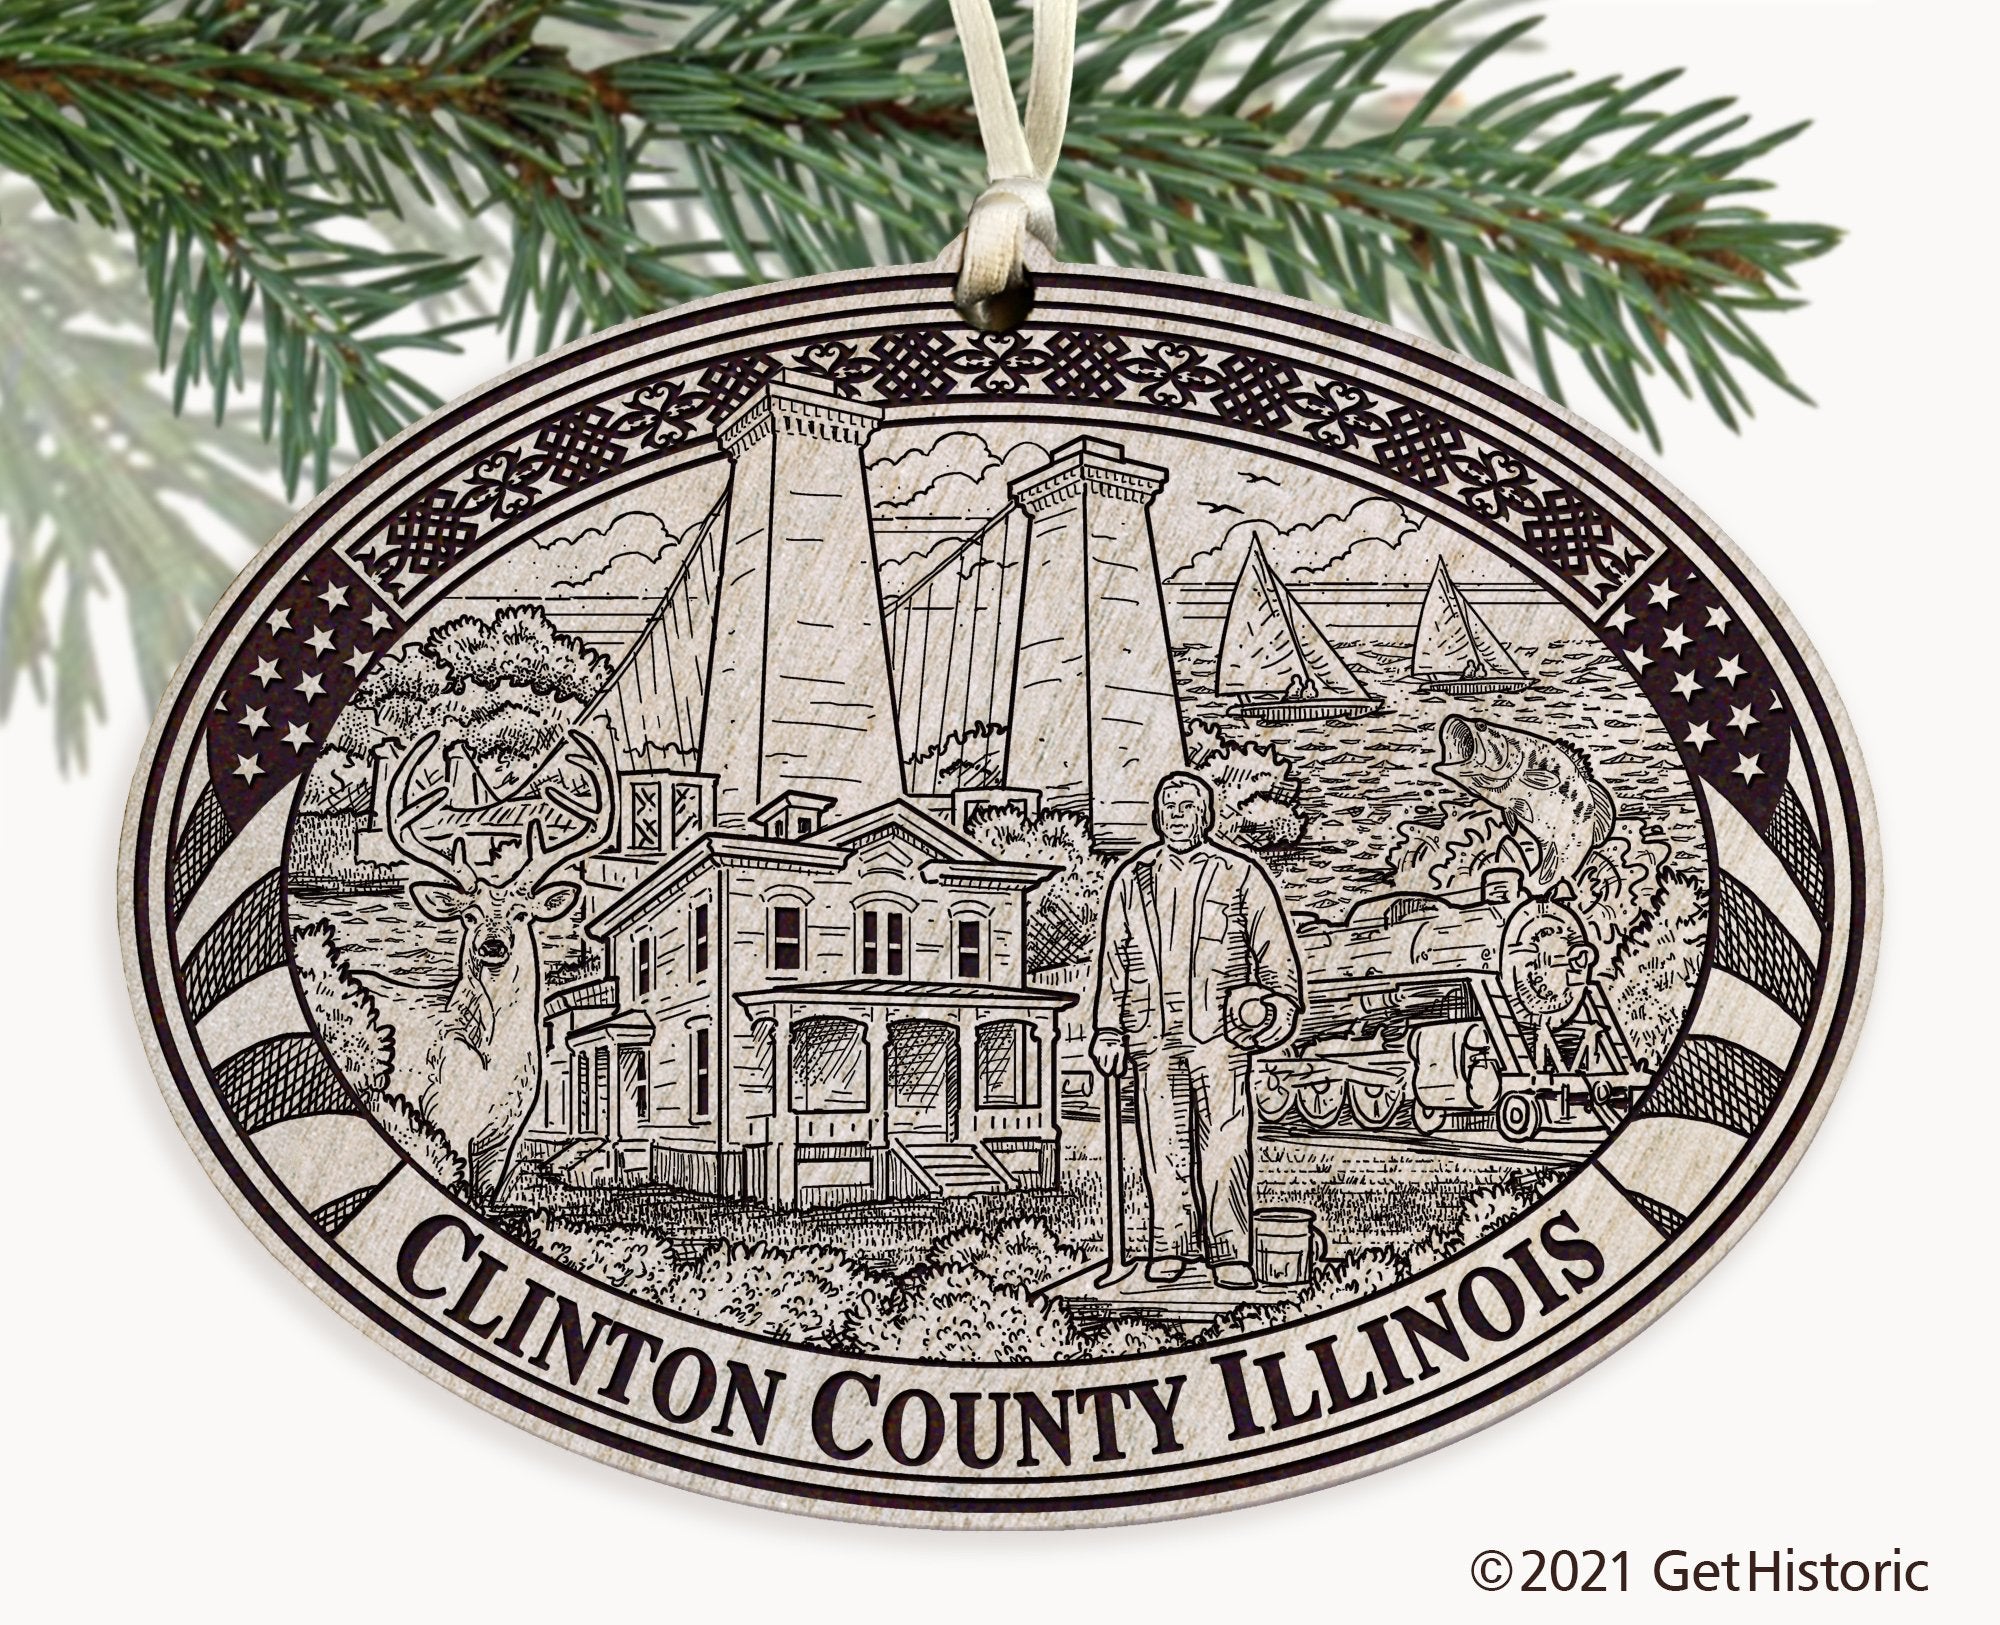 Clinton County Illinois Engraved Ornament